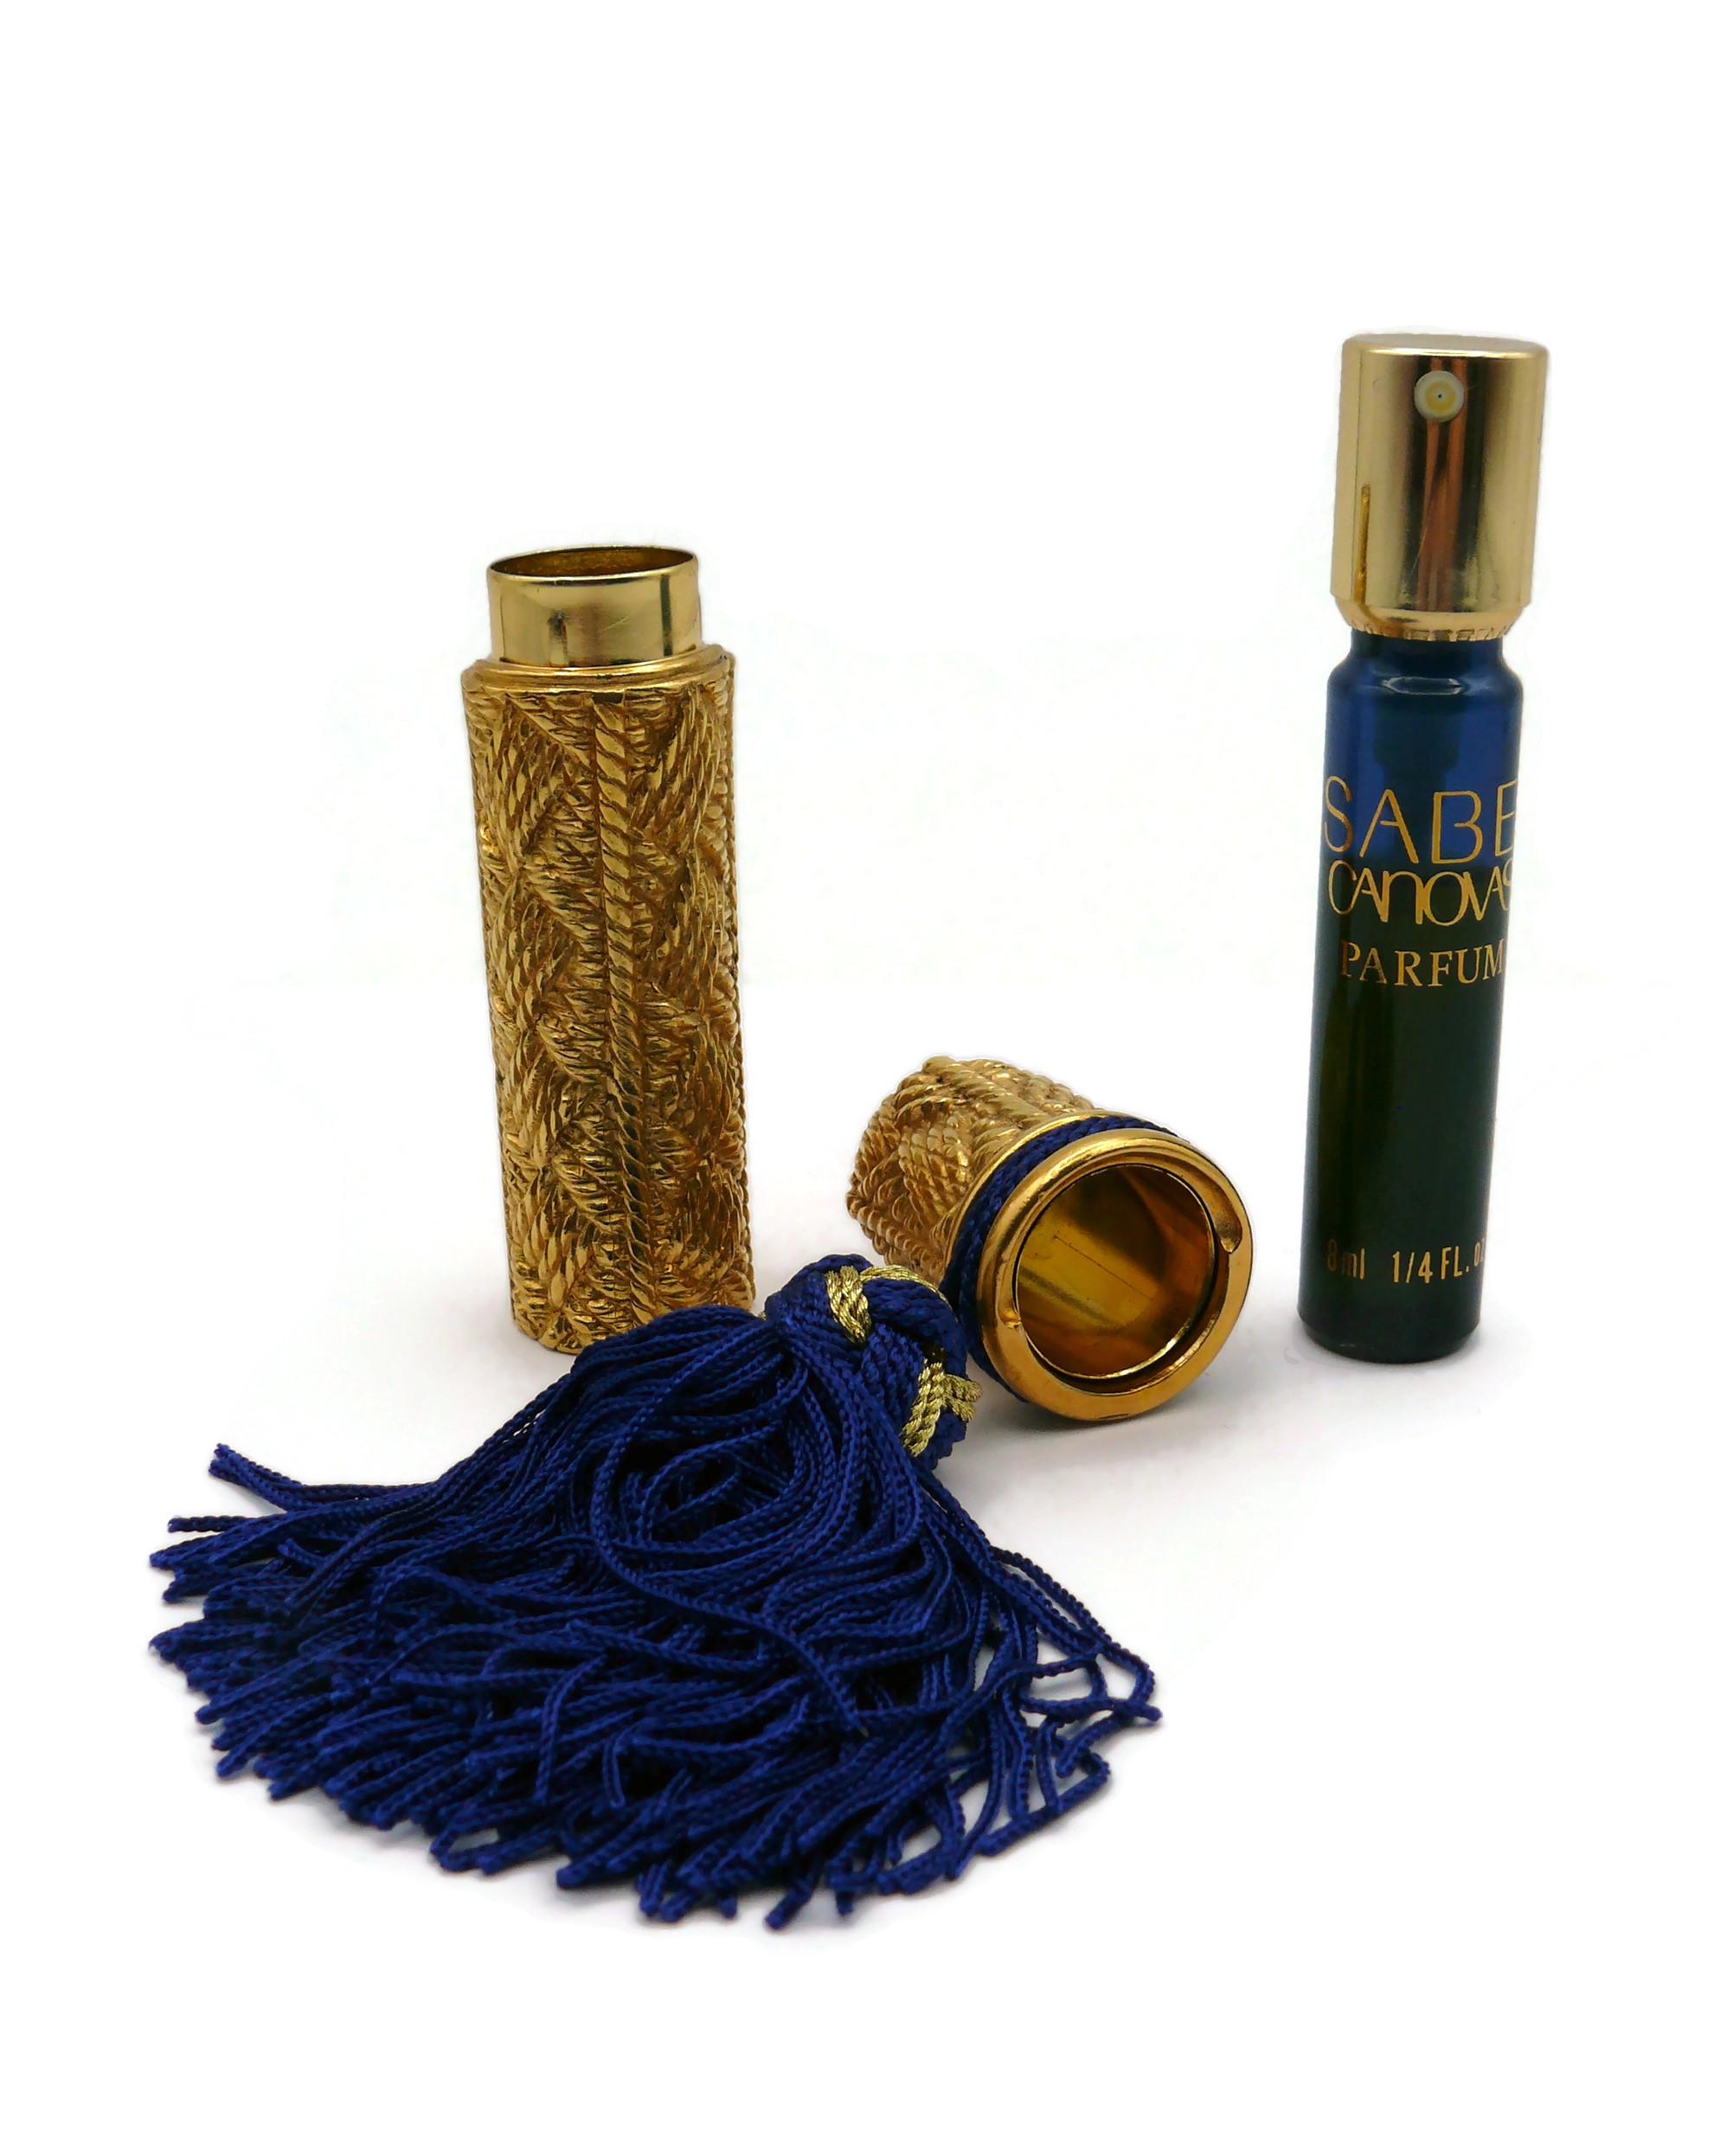 ISABEL CANOVAS Parfum by ROBERT GOOSSENS Vintage Atomizer For Sale 7